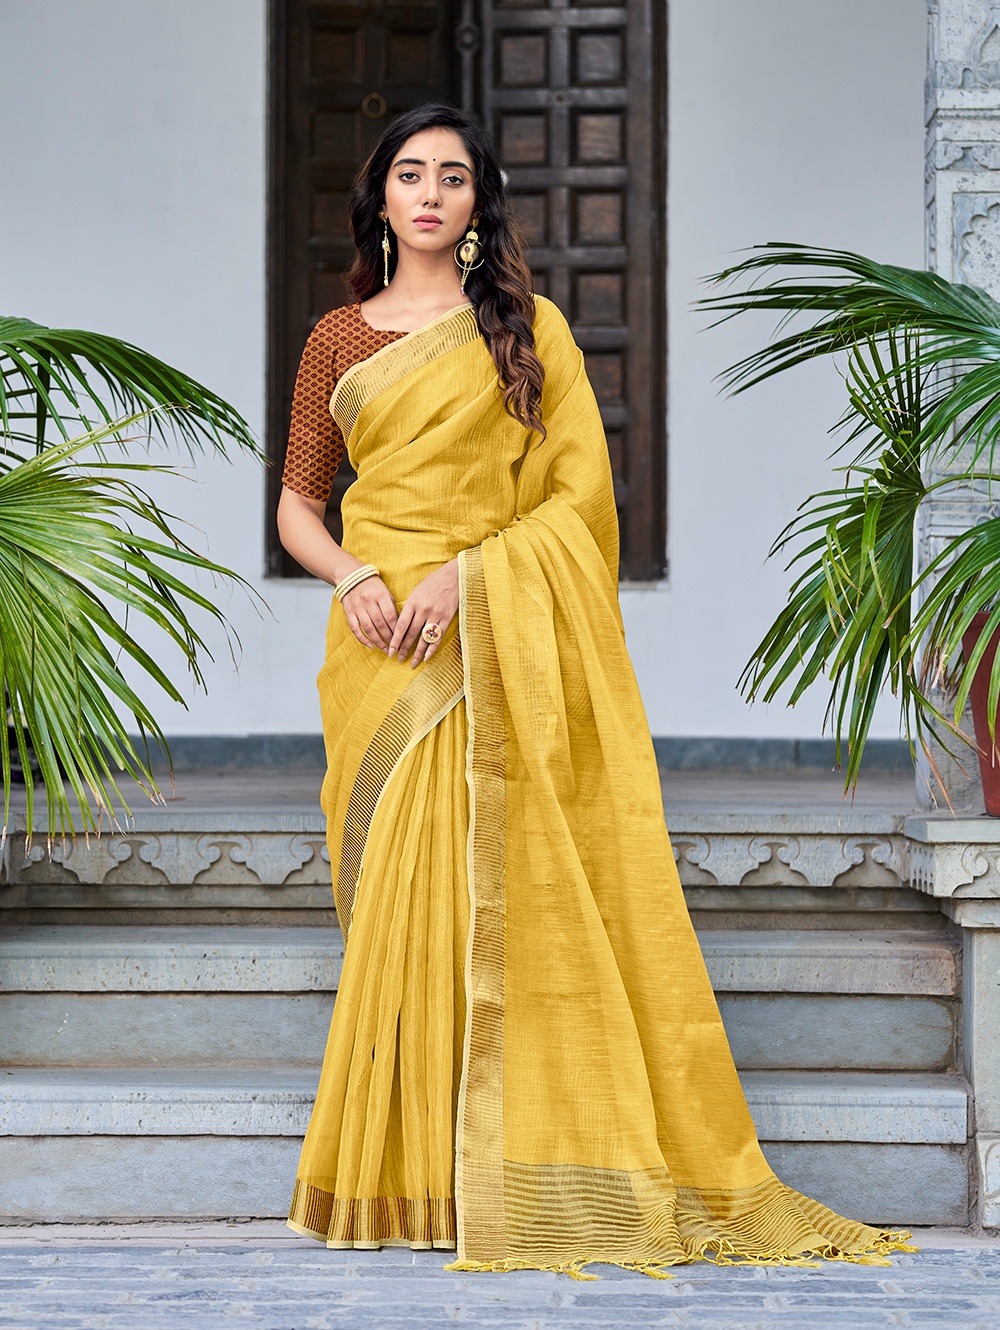 Magnificent Tissue Linen Women's Sarees - Yellow dvz0002732